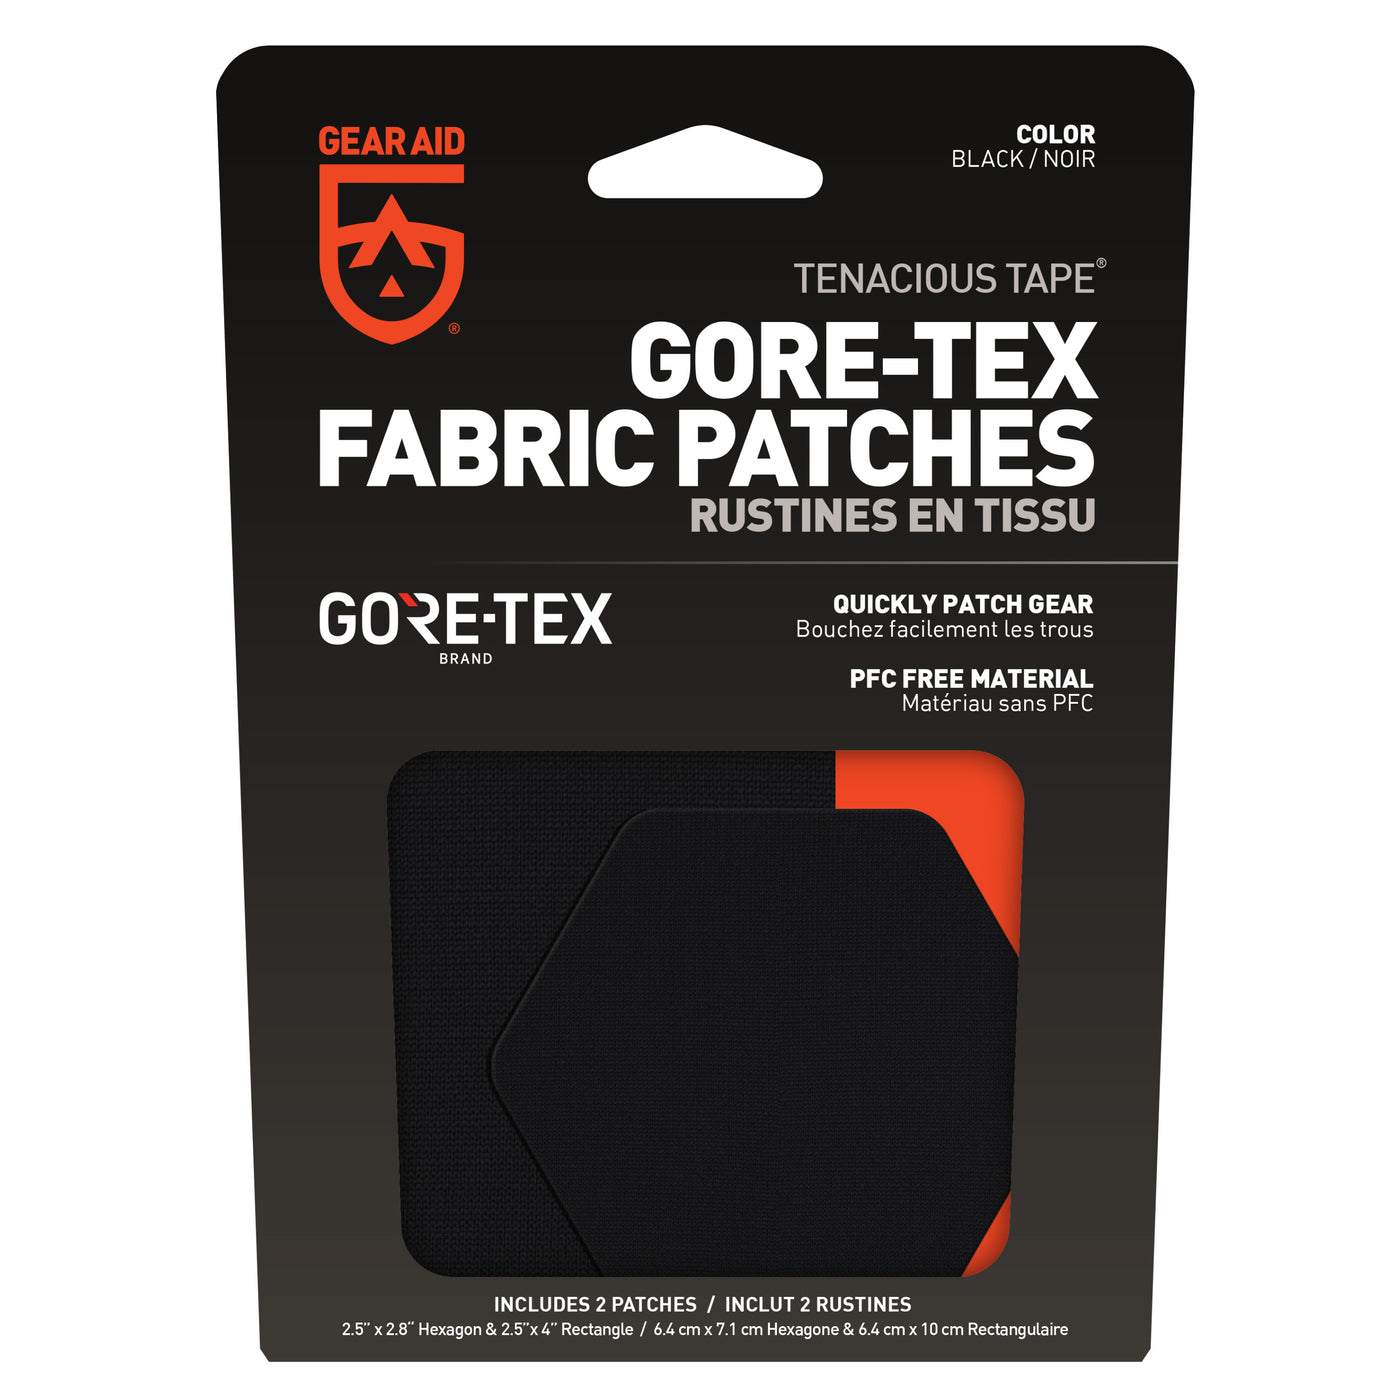 Gear Aid Gore-Tex Fabric Repair Kit at Hilton's Tent City in Boston